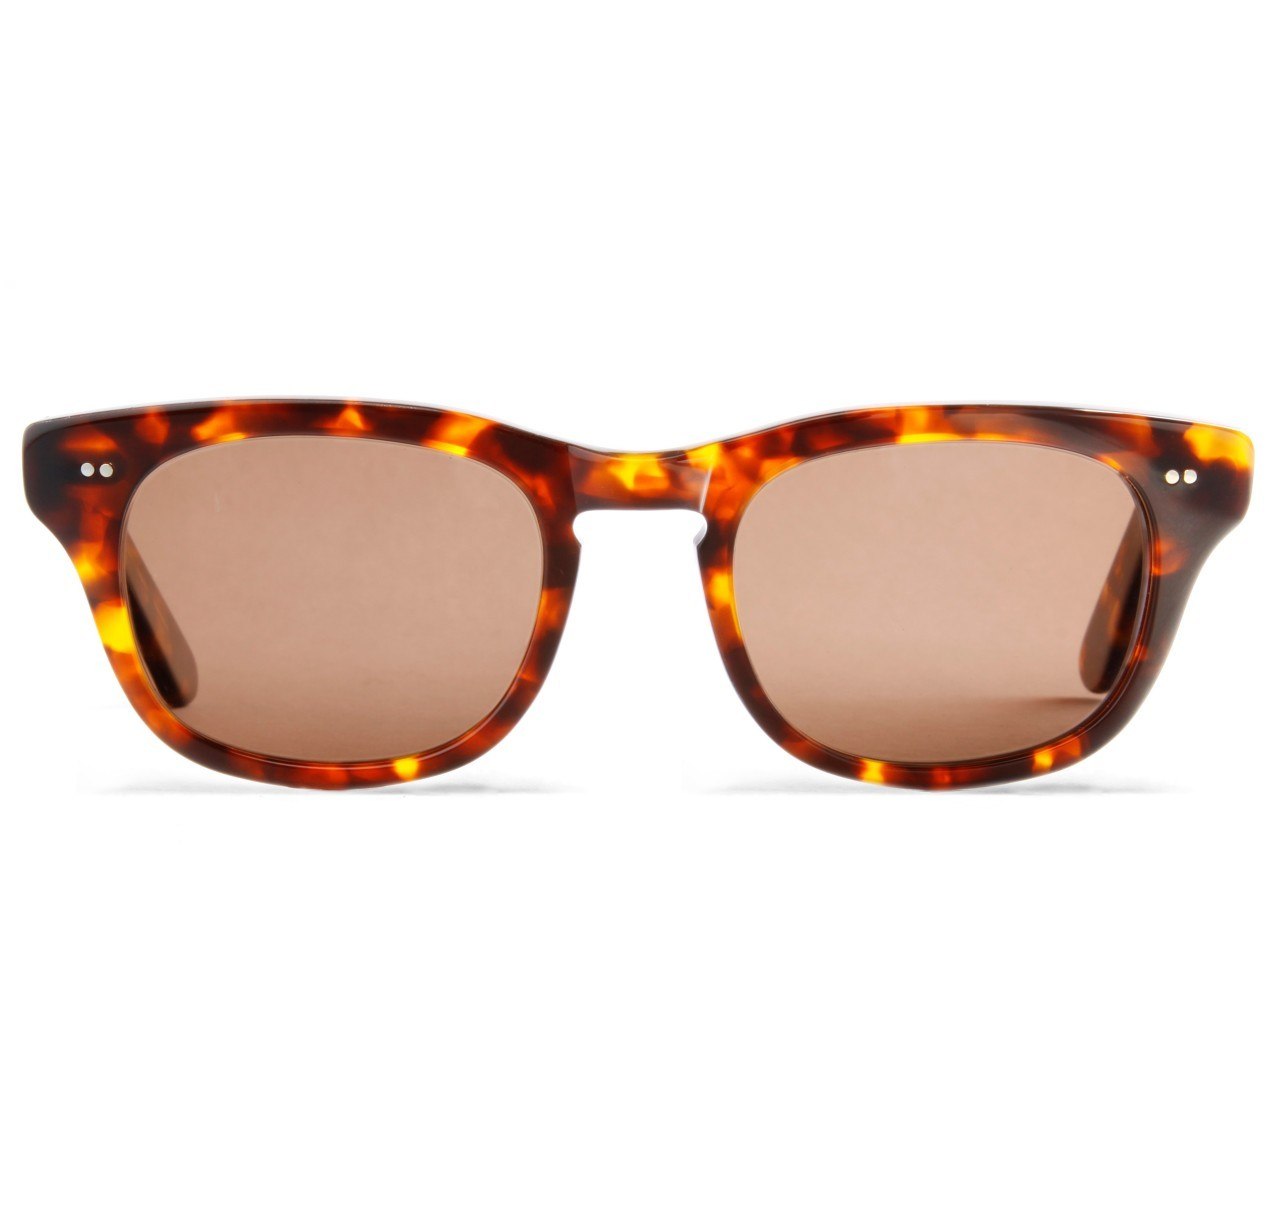 Shuron Sidewinder Tortoiseshell Sunglasses